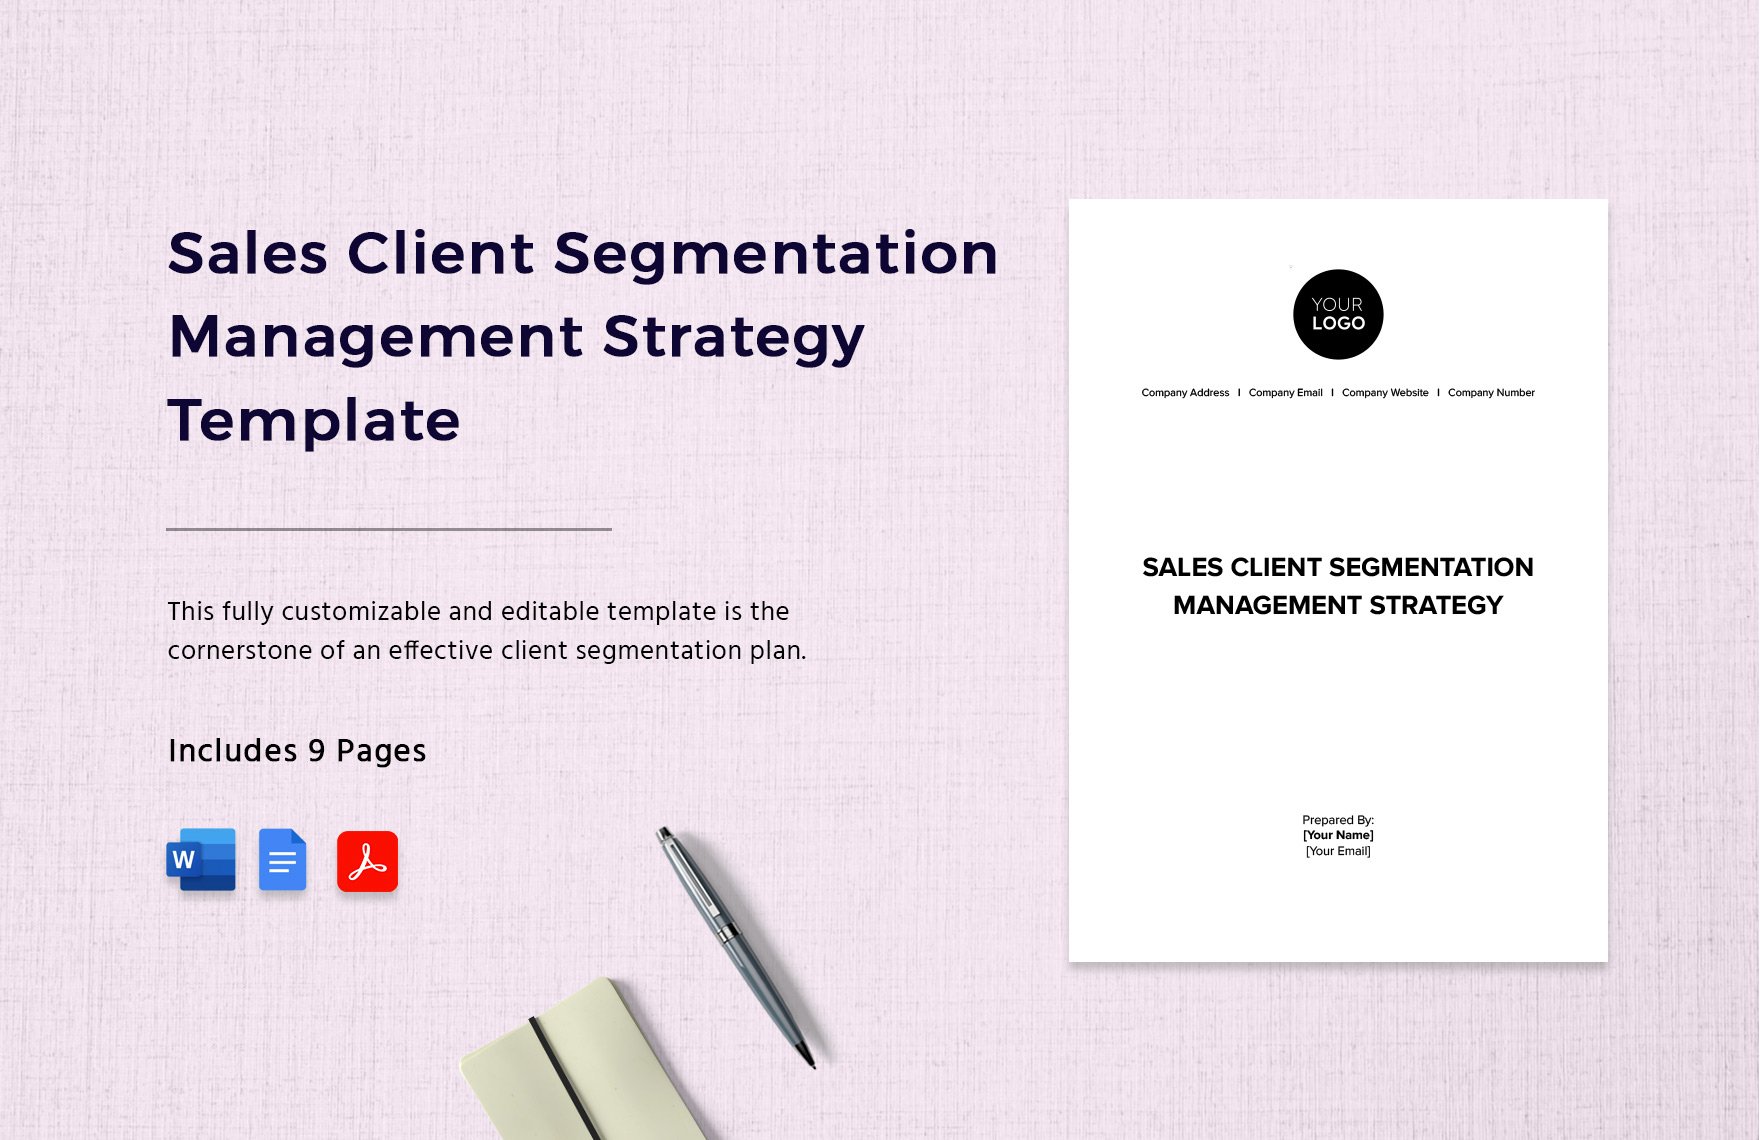 Sales Client Segmentation Management Strategy Template